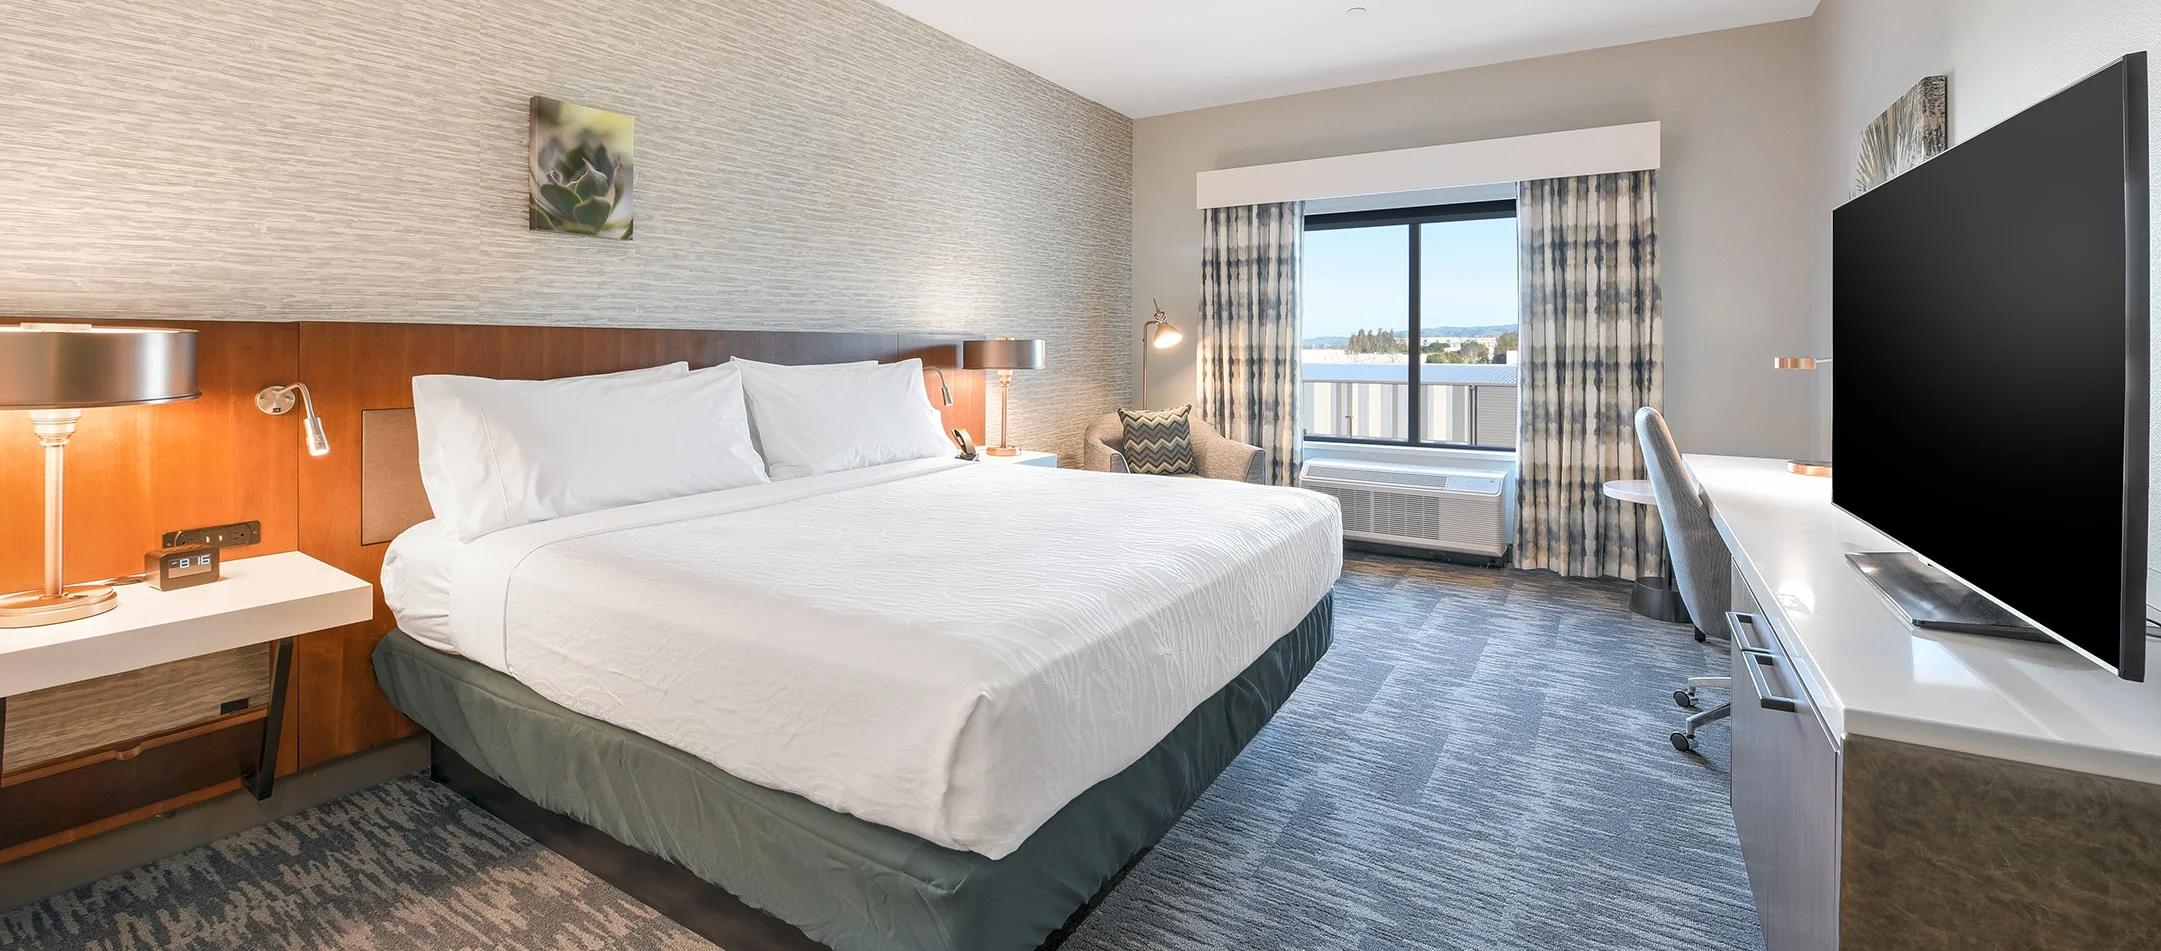 guest rooms at Hilton Garden Inn Fremont Milpitas